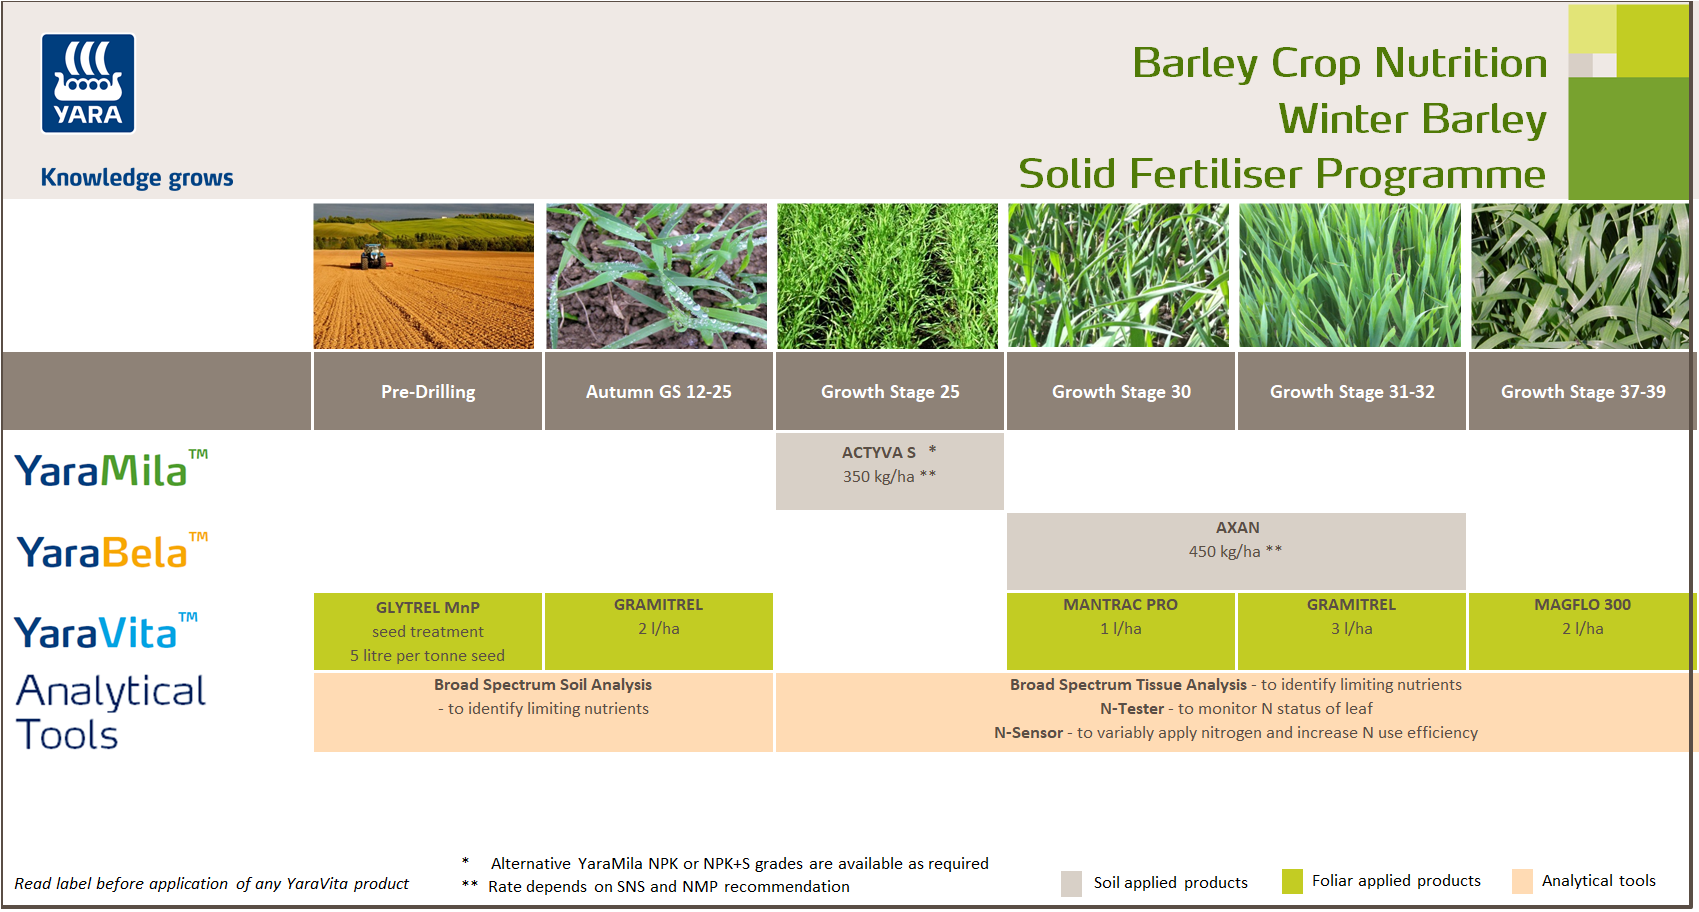 Winter barley fertiliser programme